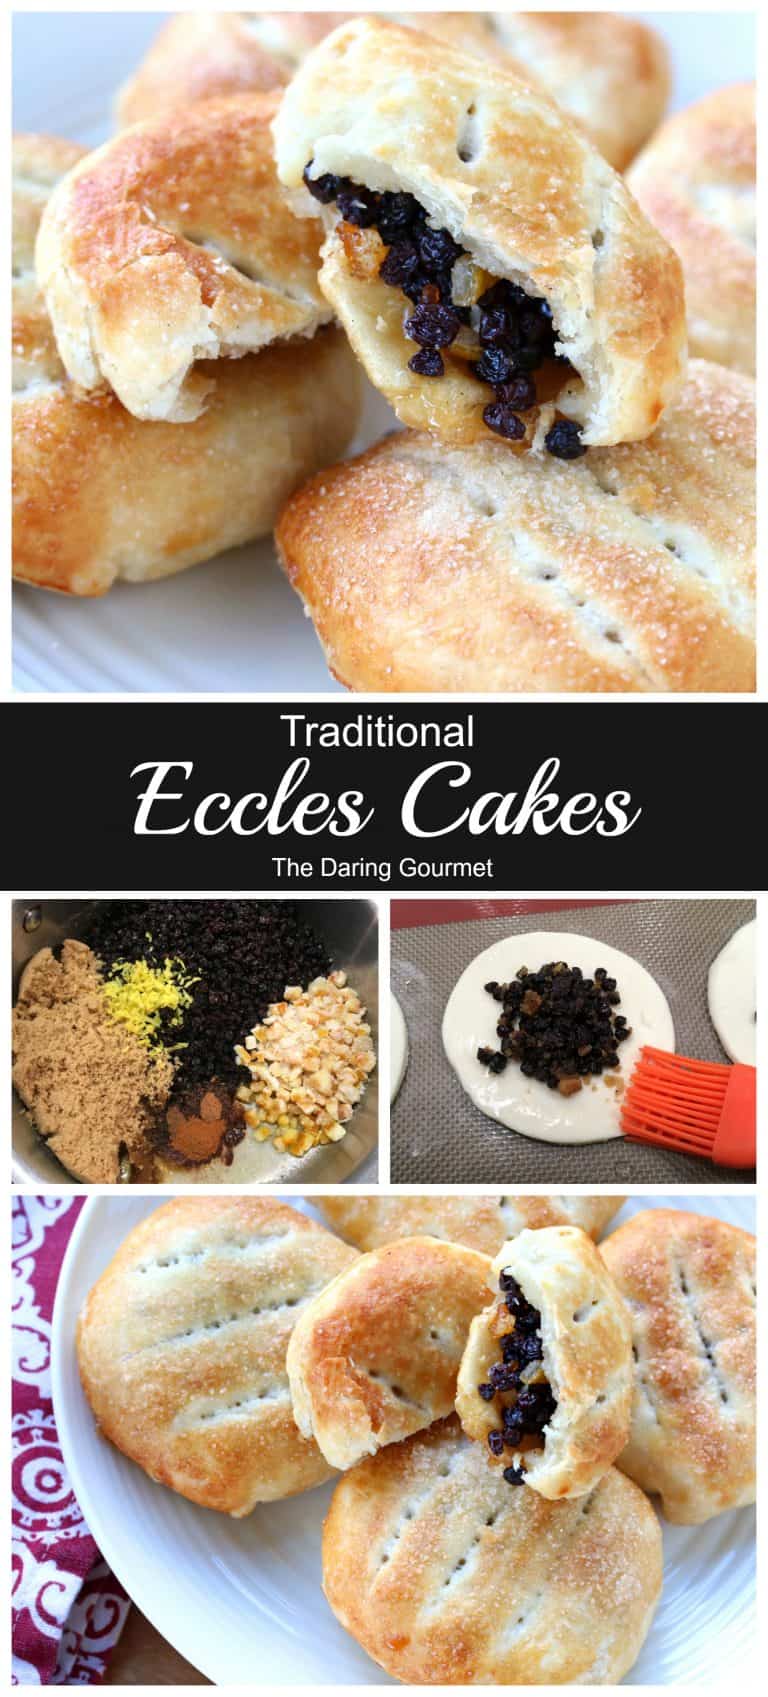 eccles cakes recipe best traditional authentic British English pastries currants